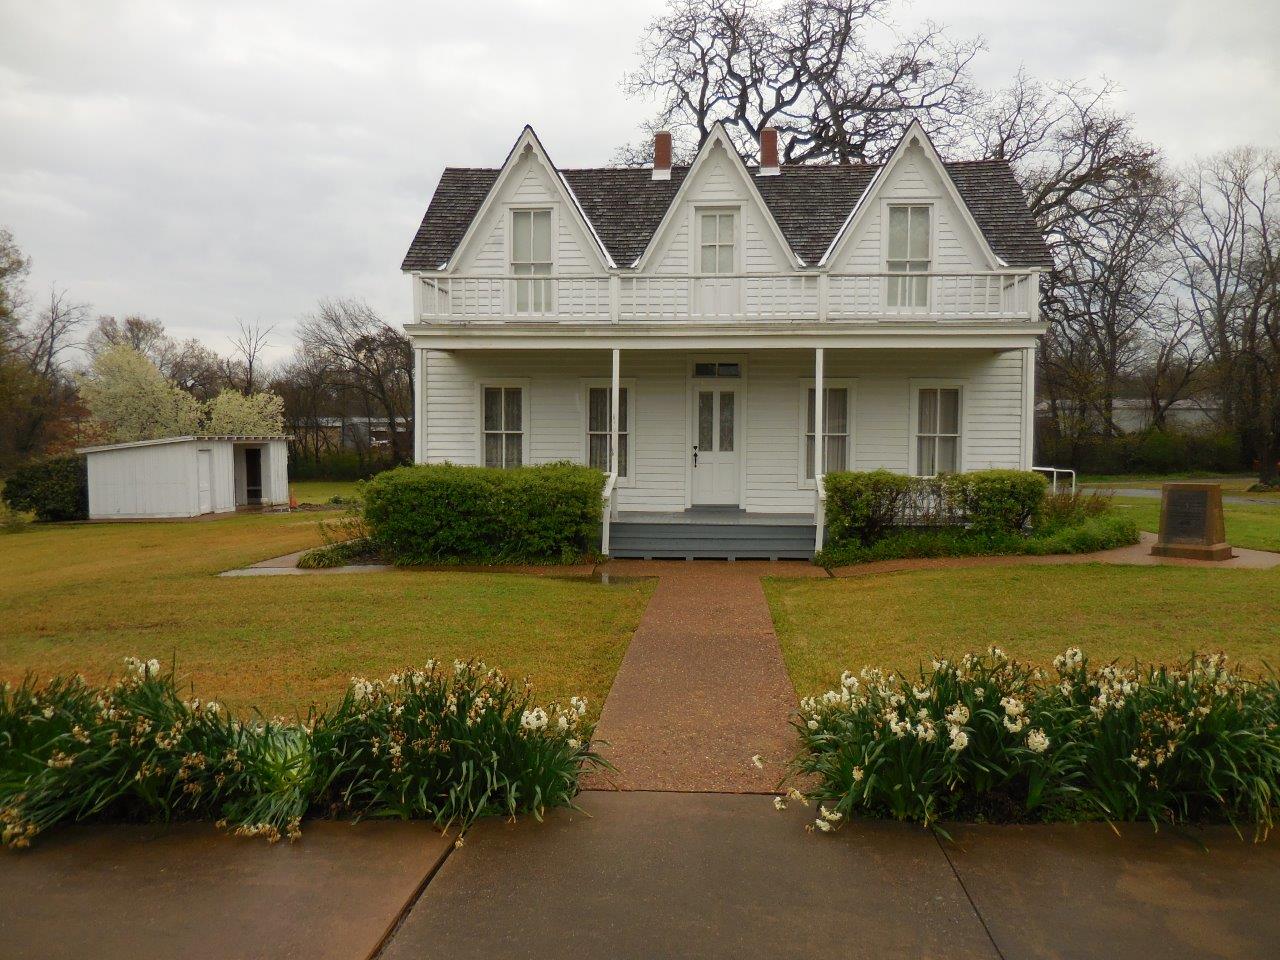 Dwight Eisenhower birthplace house